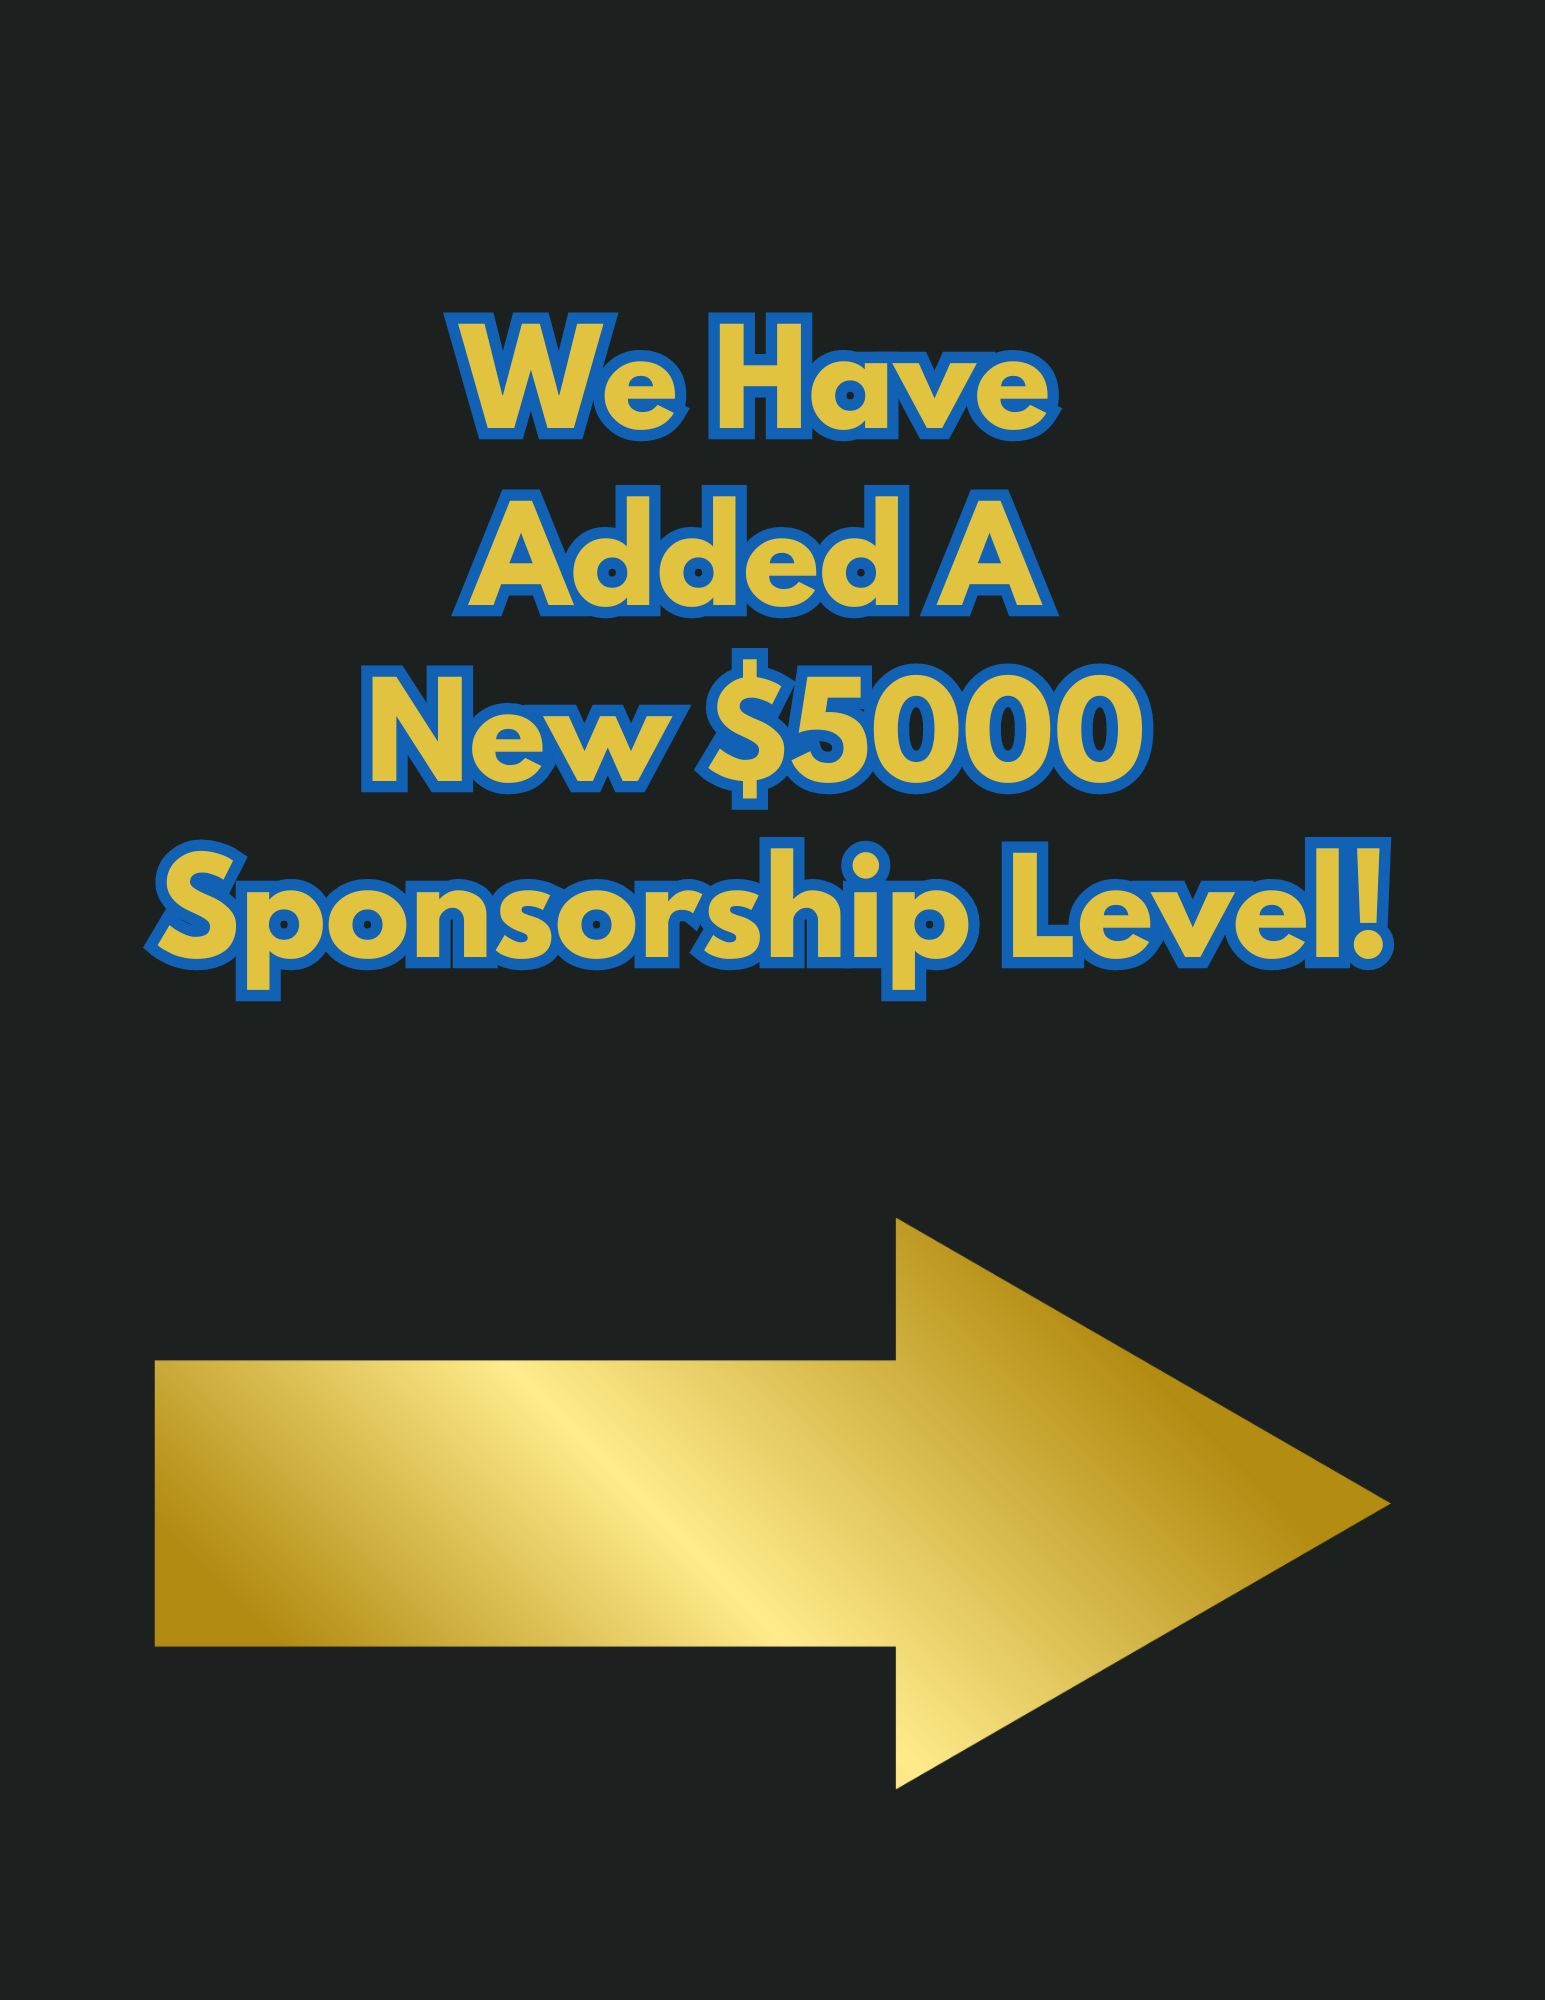 We have added a $5000.00 SPONSORSHIP level!!